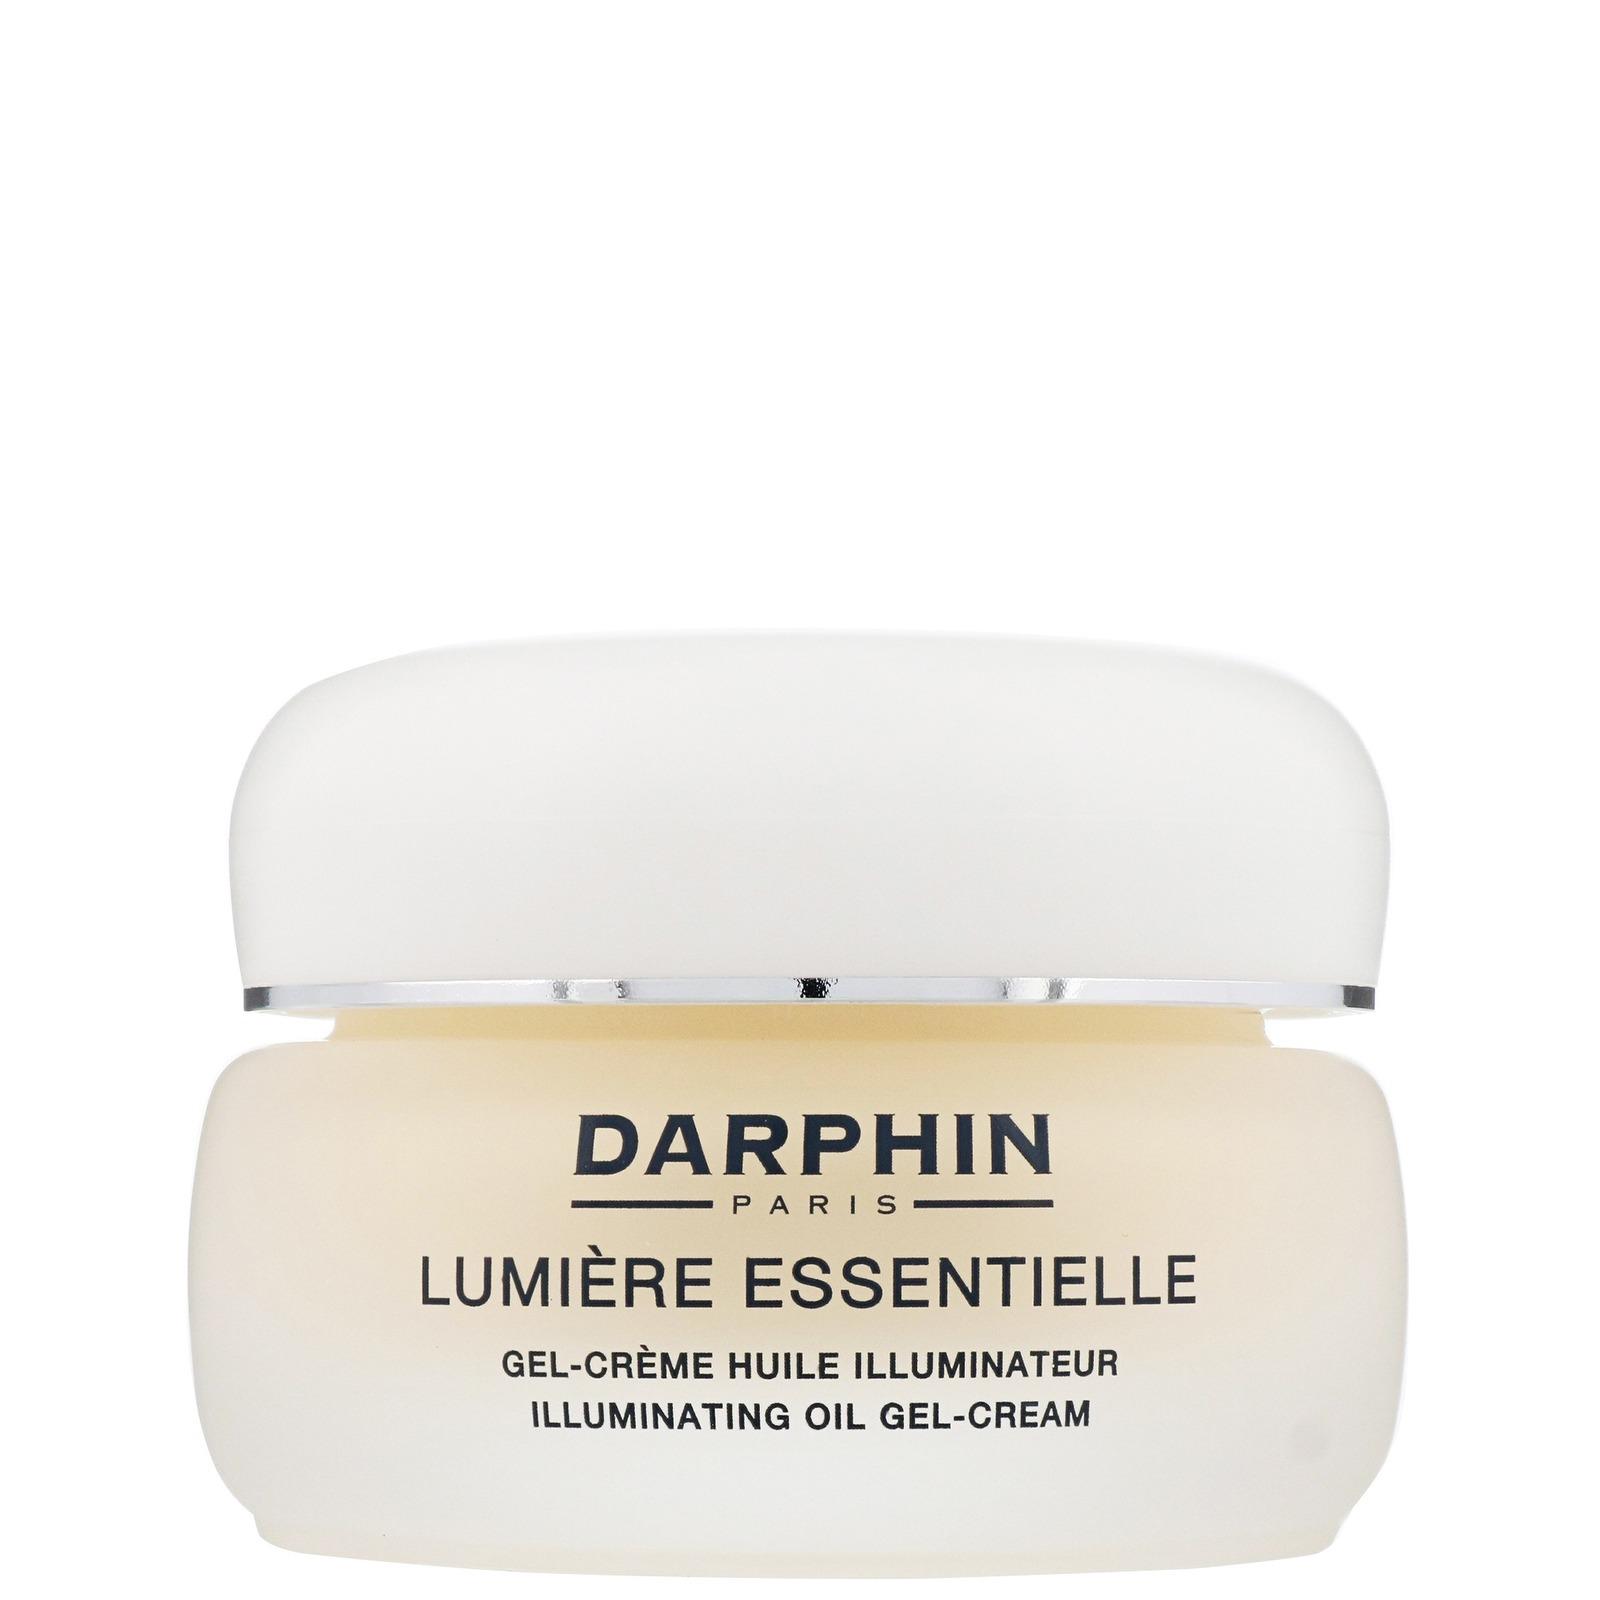 Lumiere Essentielle Illuminating Oil Gel-Cream 50ml